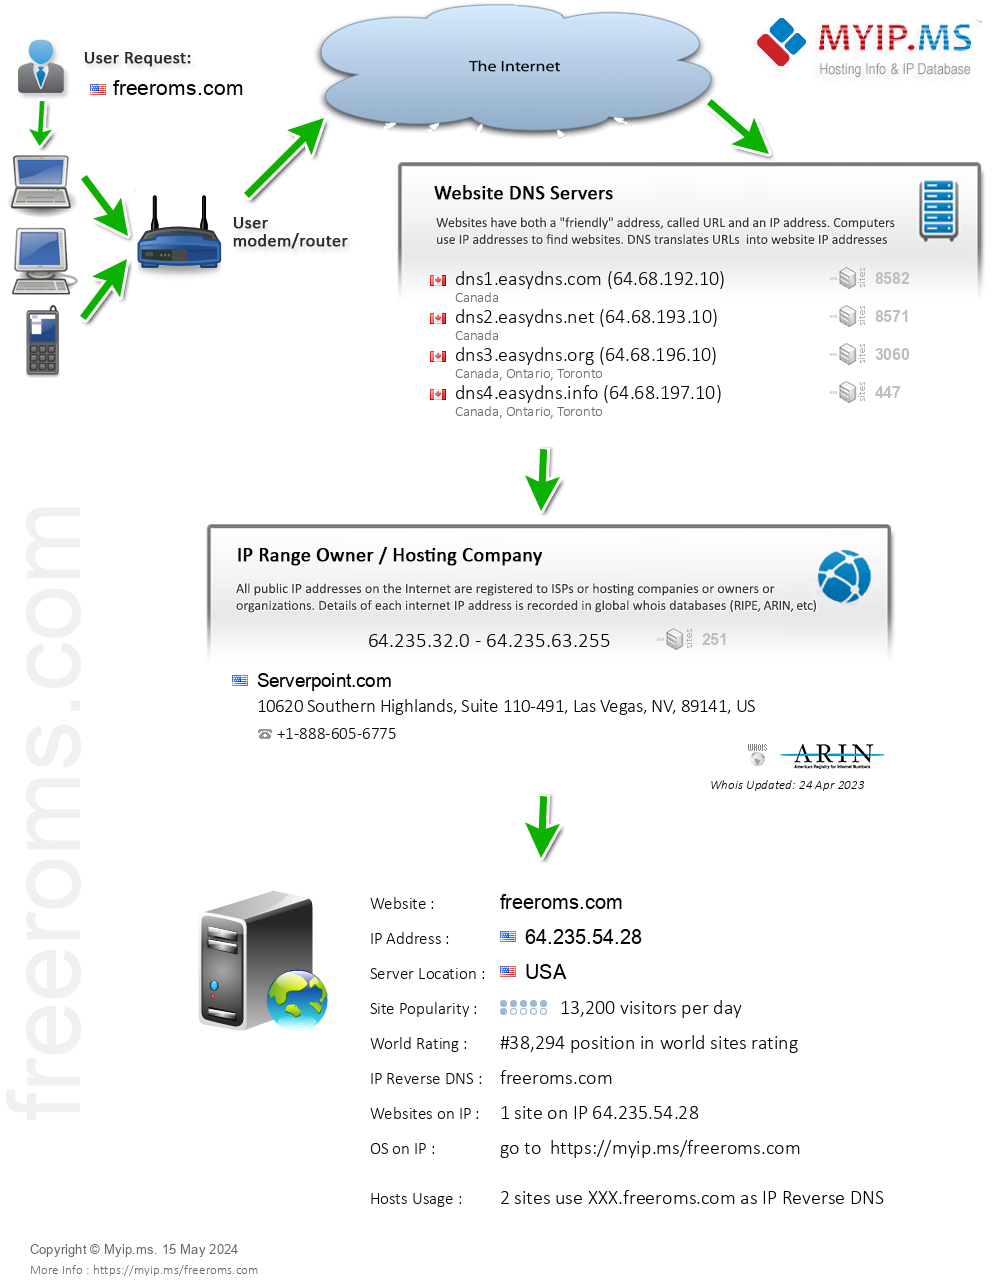 Freeroms.com - Website Hosting Visual IP Diagram